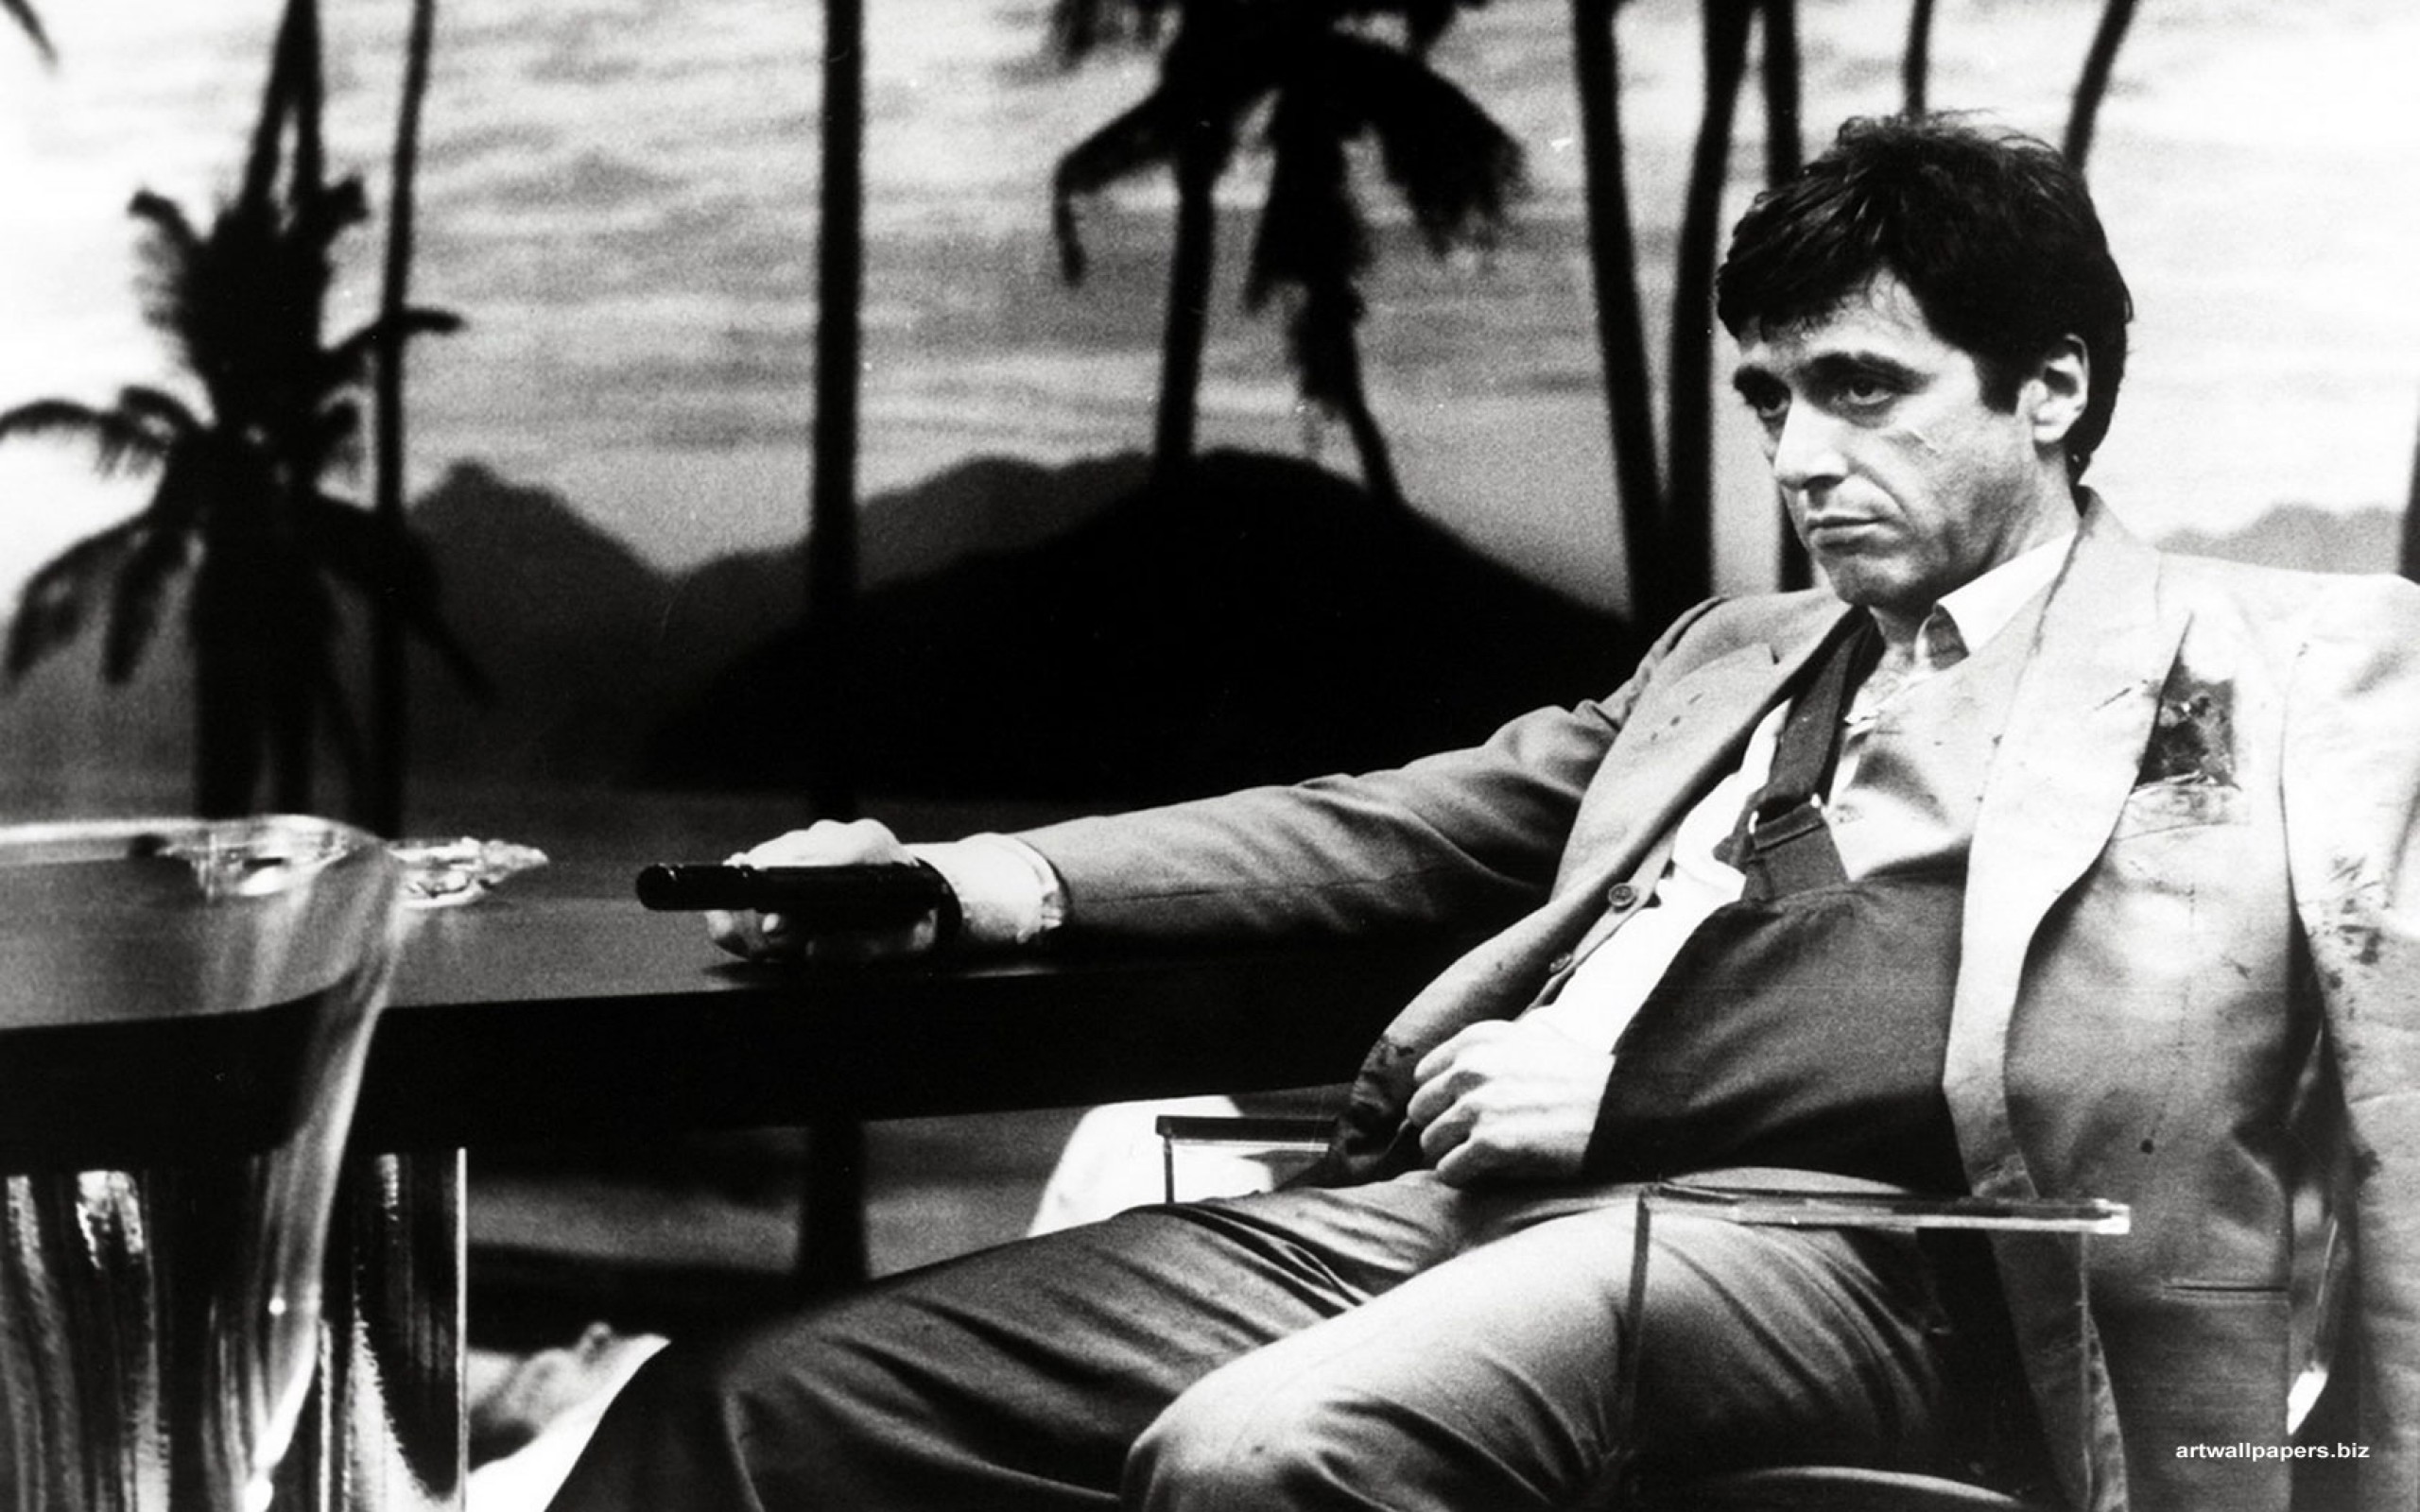 2560x1600 Al Pacino in Scarface directed by Brian De Palma, 1983